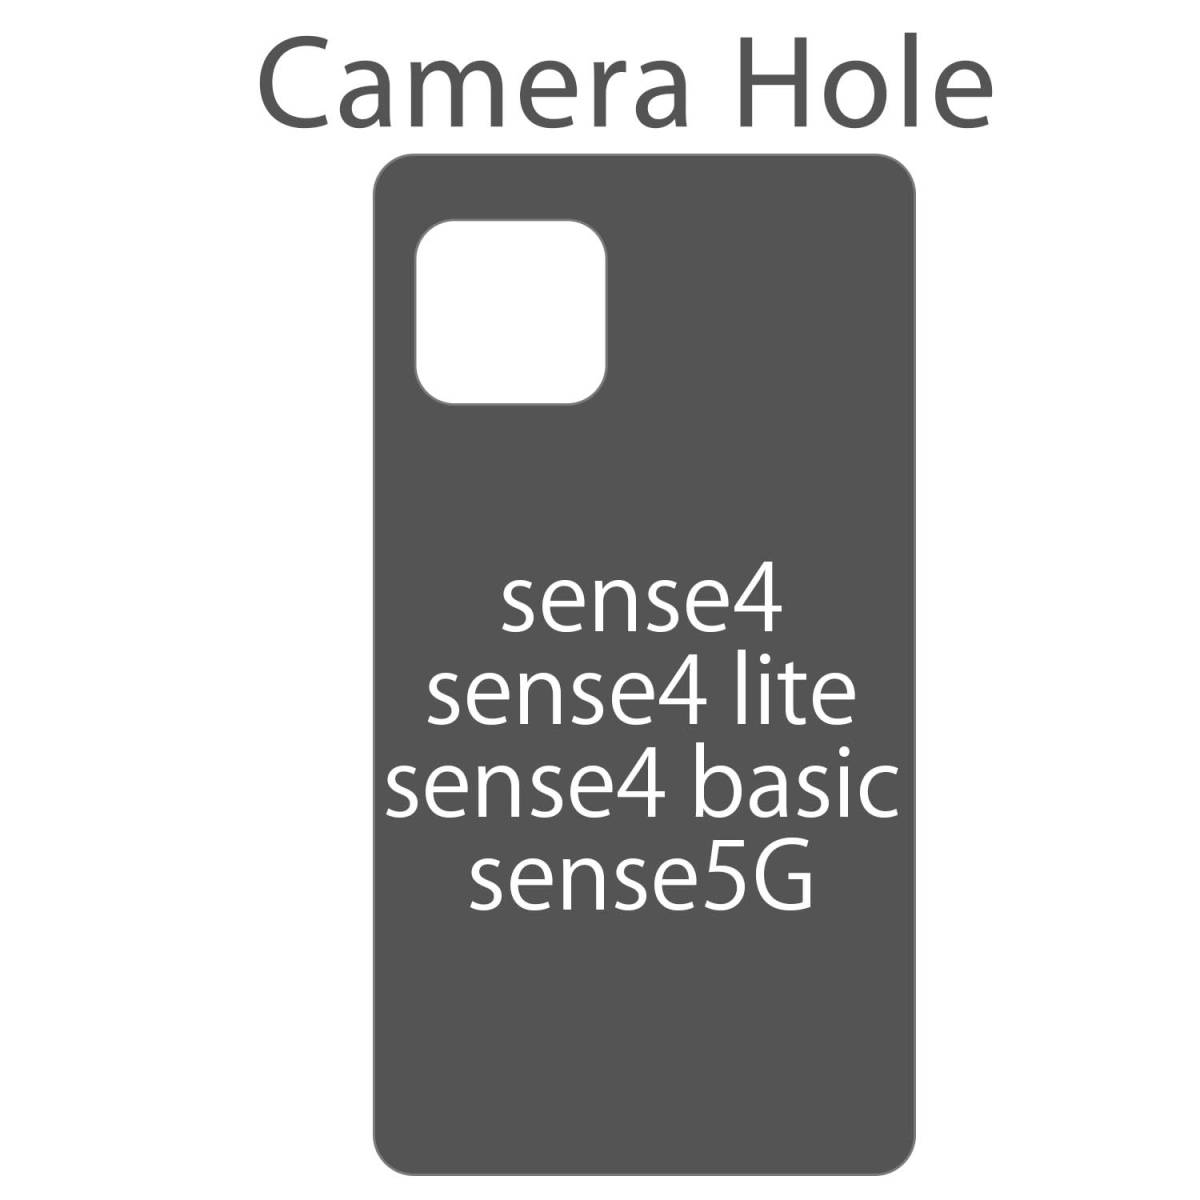 AQUOS Sense4 ケース 手帳型 かわいい ピンク 桃 SH41A Sense5G カバー Sense4lite sense4basic 鏡付 ストラップ チェック柄 送料無料 安いの画像3